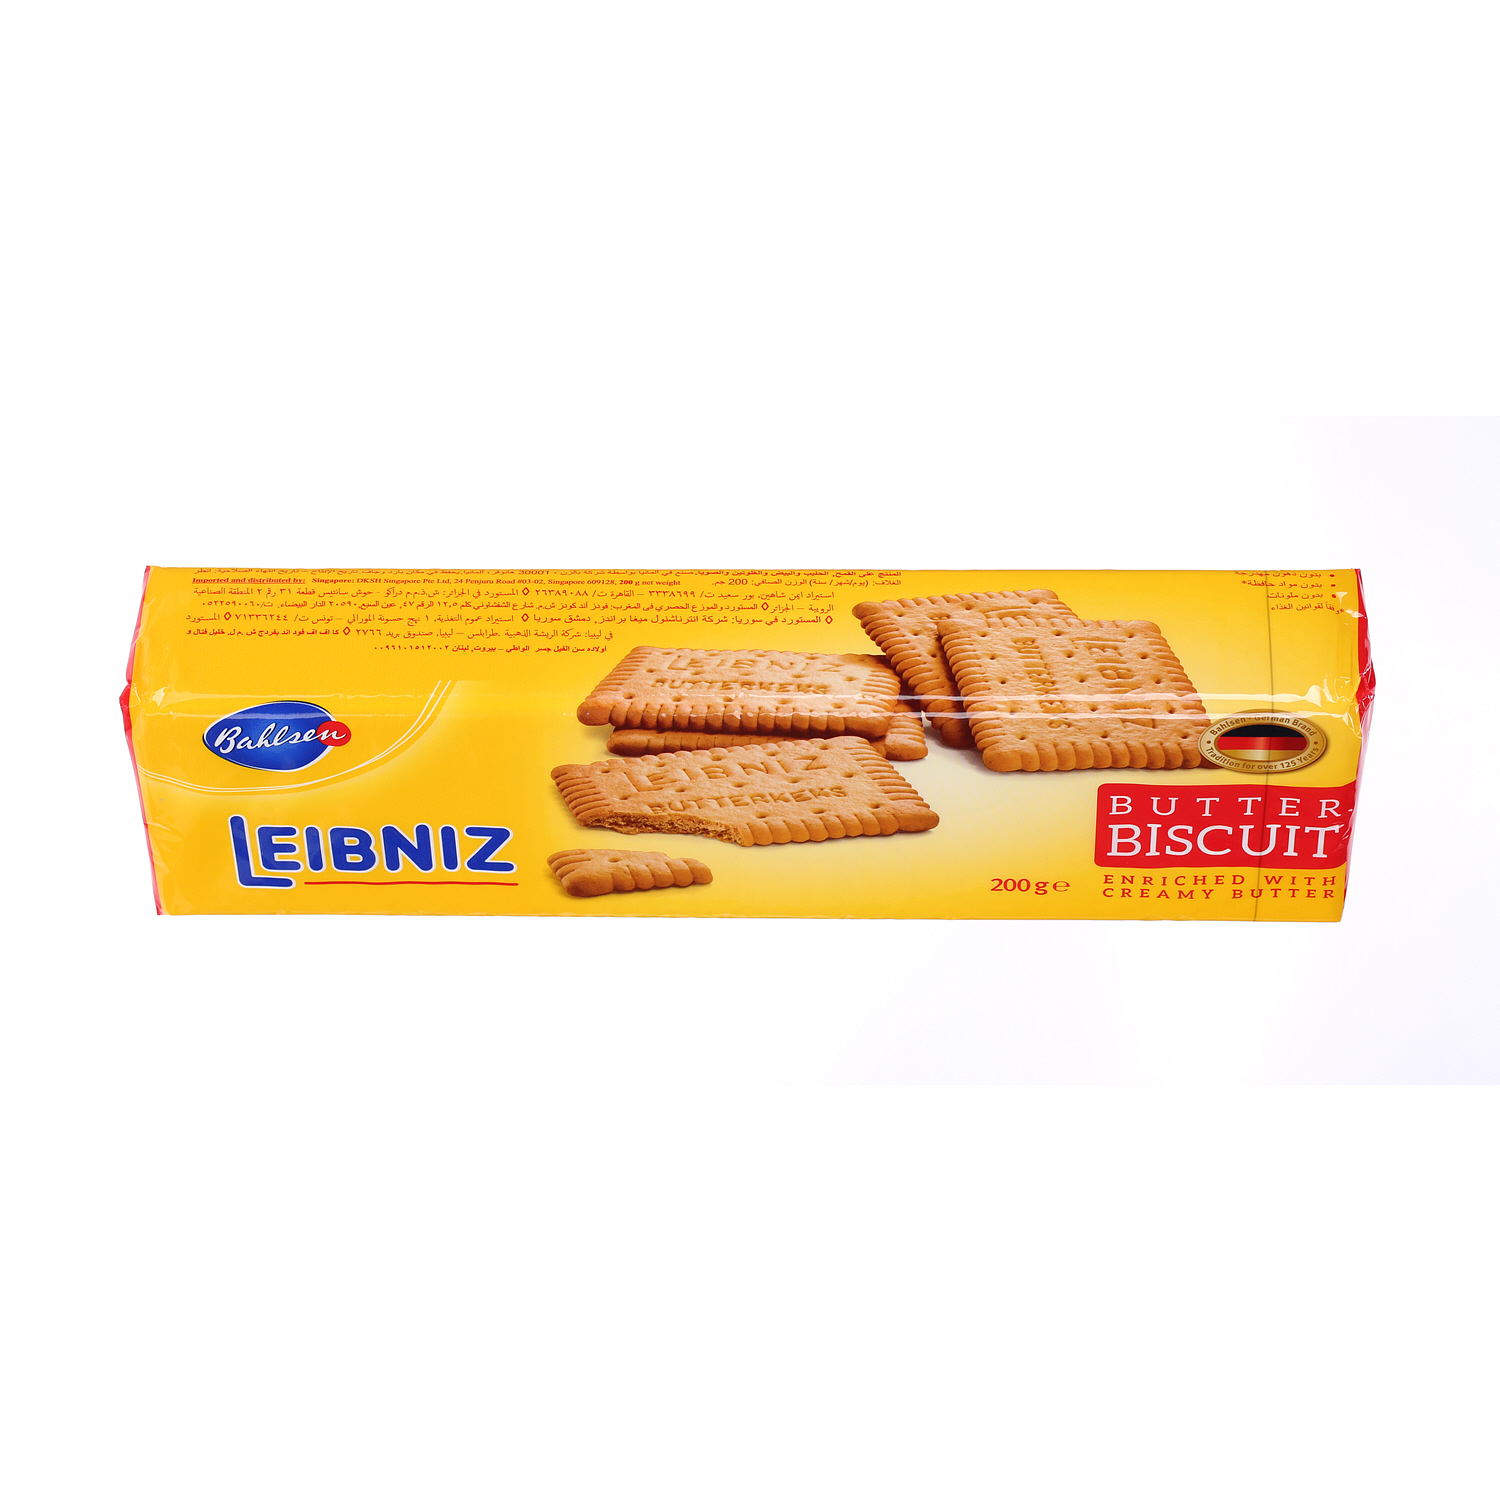 Bahlsens Biscuits Leibniz 200 g